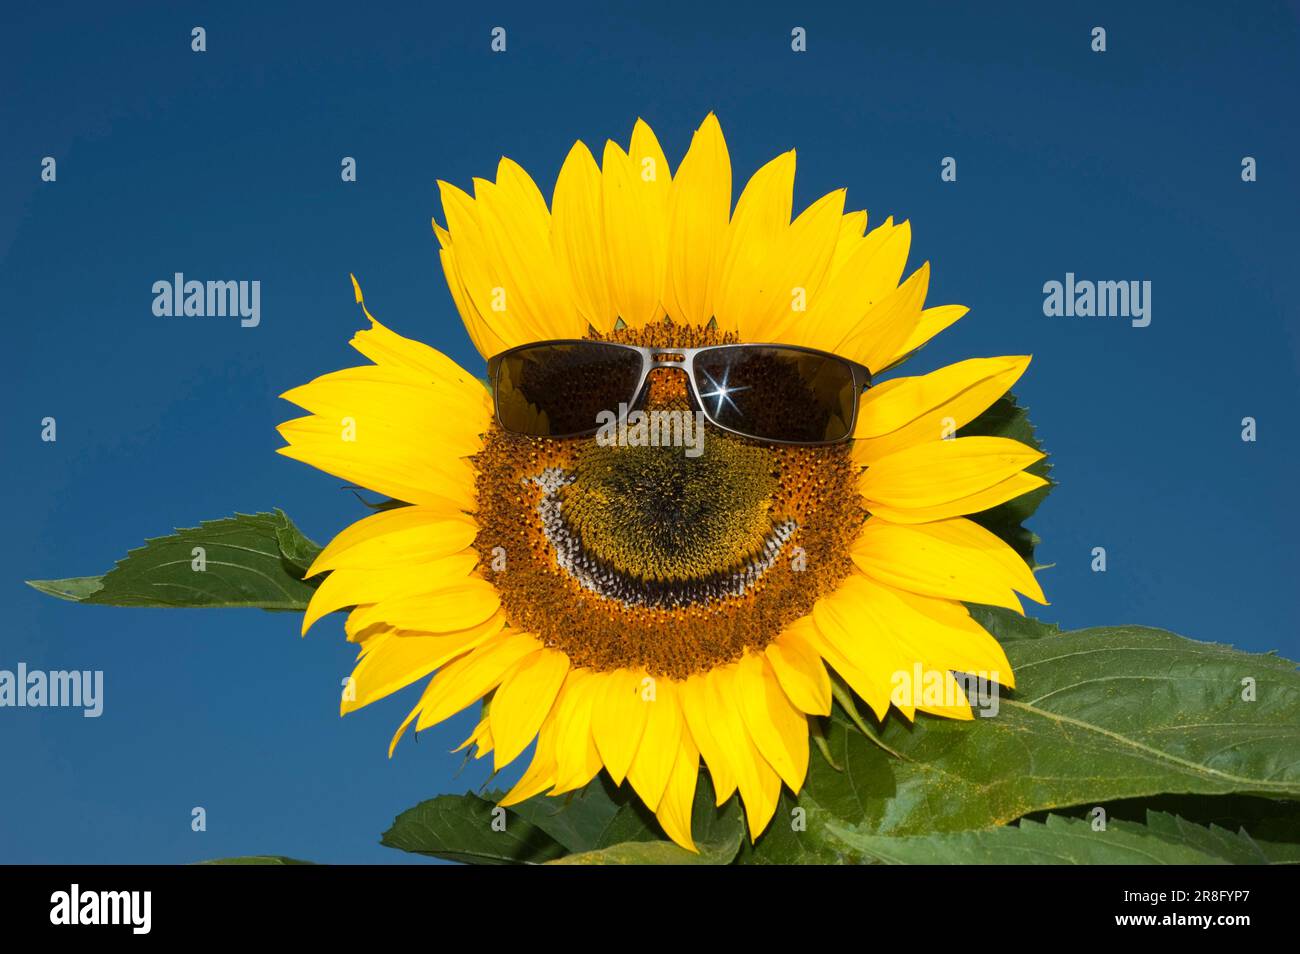 Sunflower (Helianthus anuus) wearing sunglasses, laughing Stock Photo